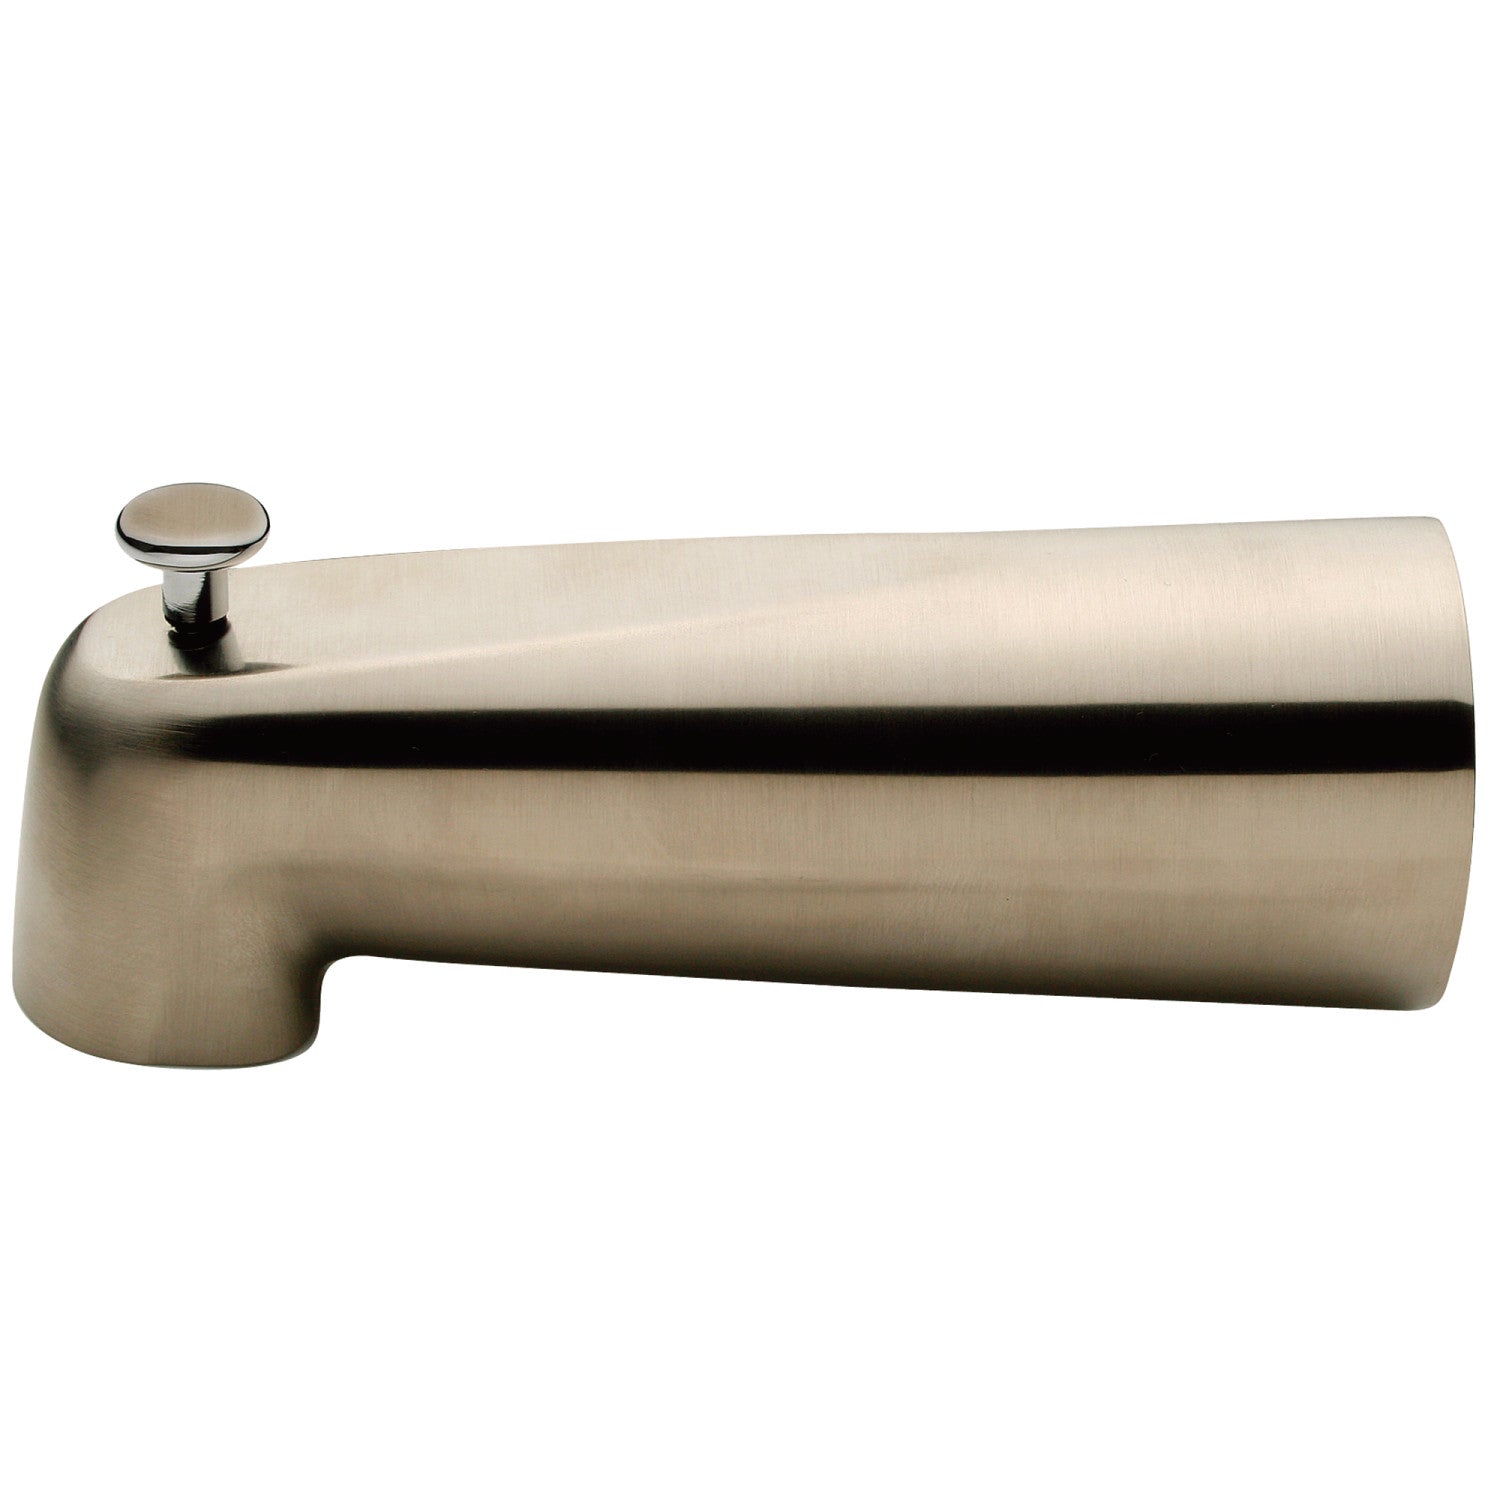 Kingston Brass Shower Scape K1089A8 7-Inch Diverter Tub Spout